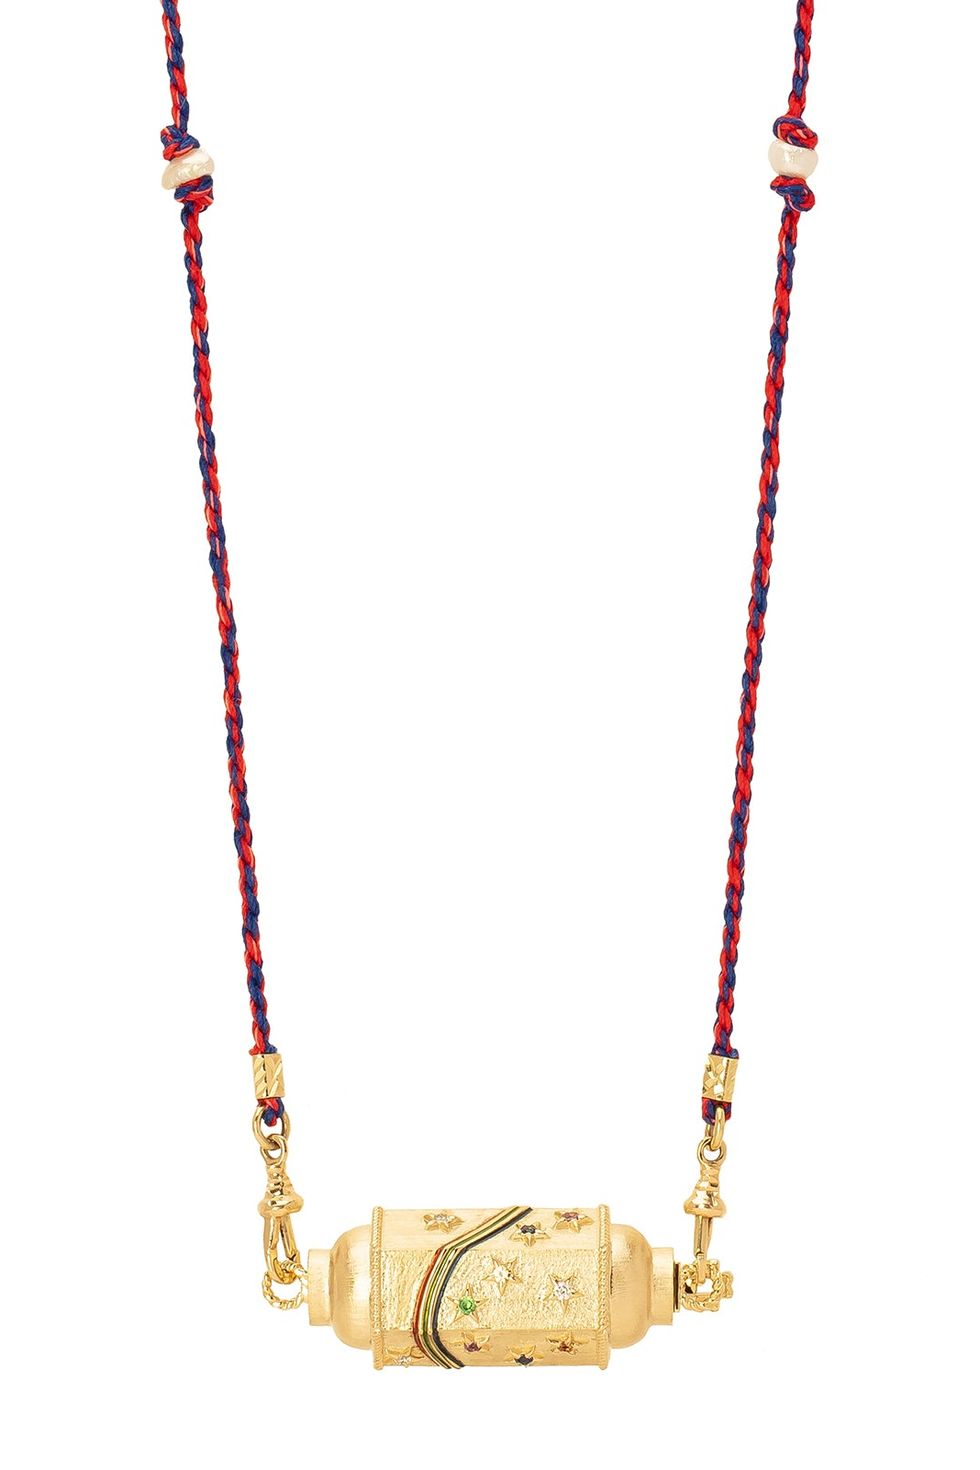 Ileana Makri Small Oblong Lock Chain Necklace